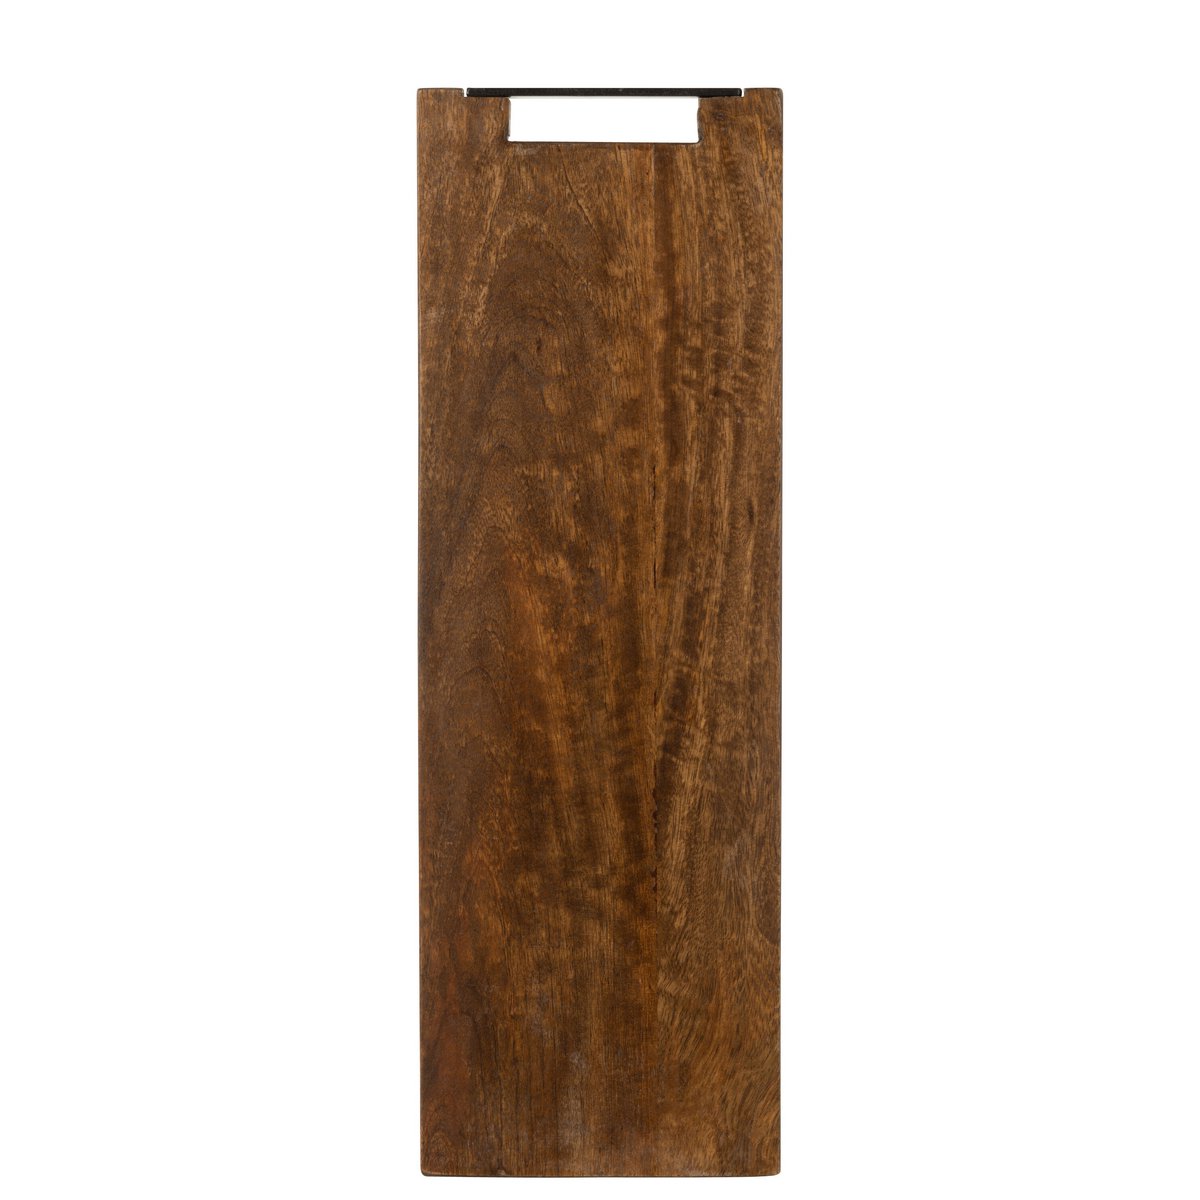 Mango wood cutting board - long